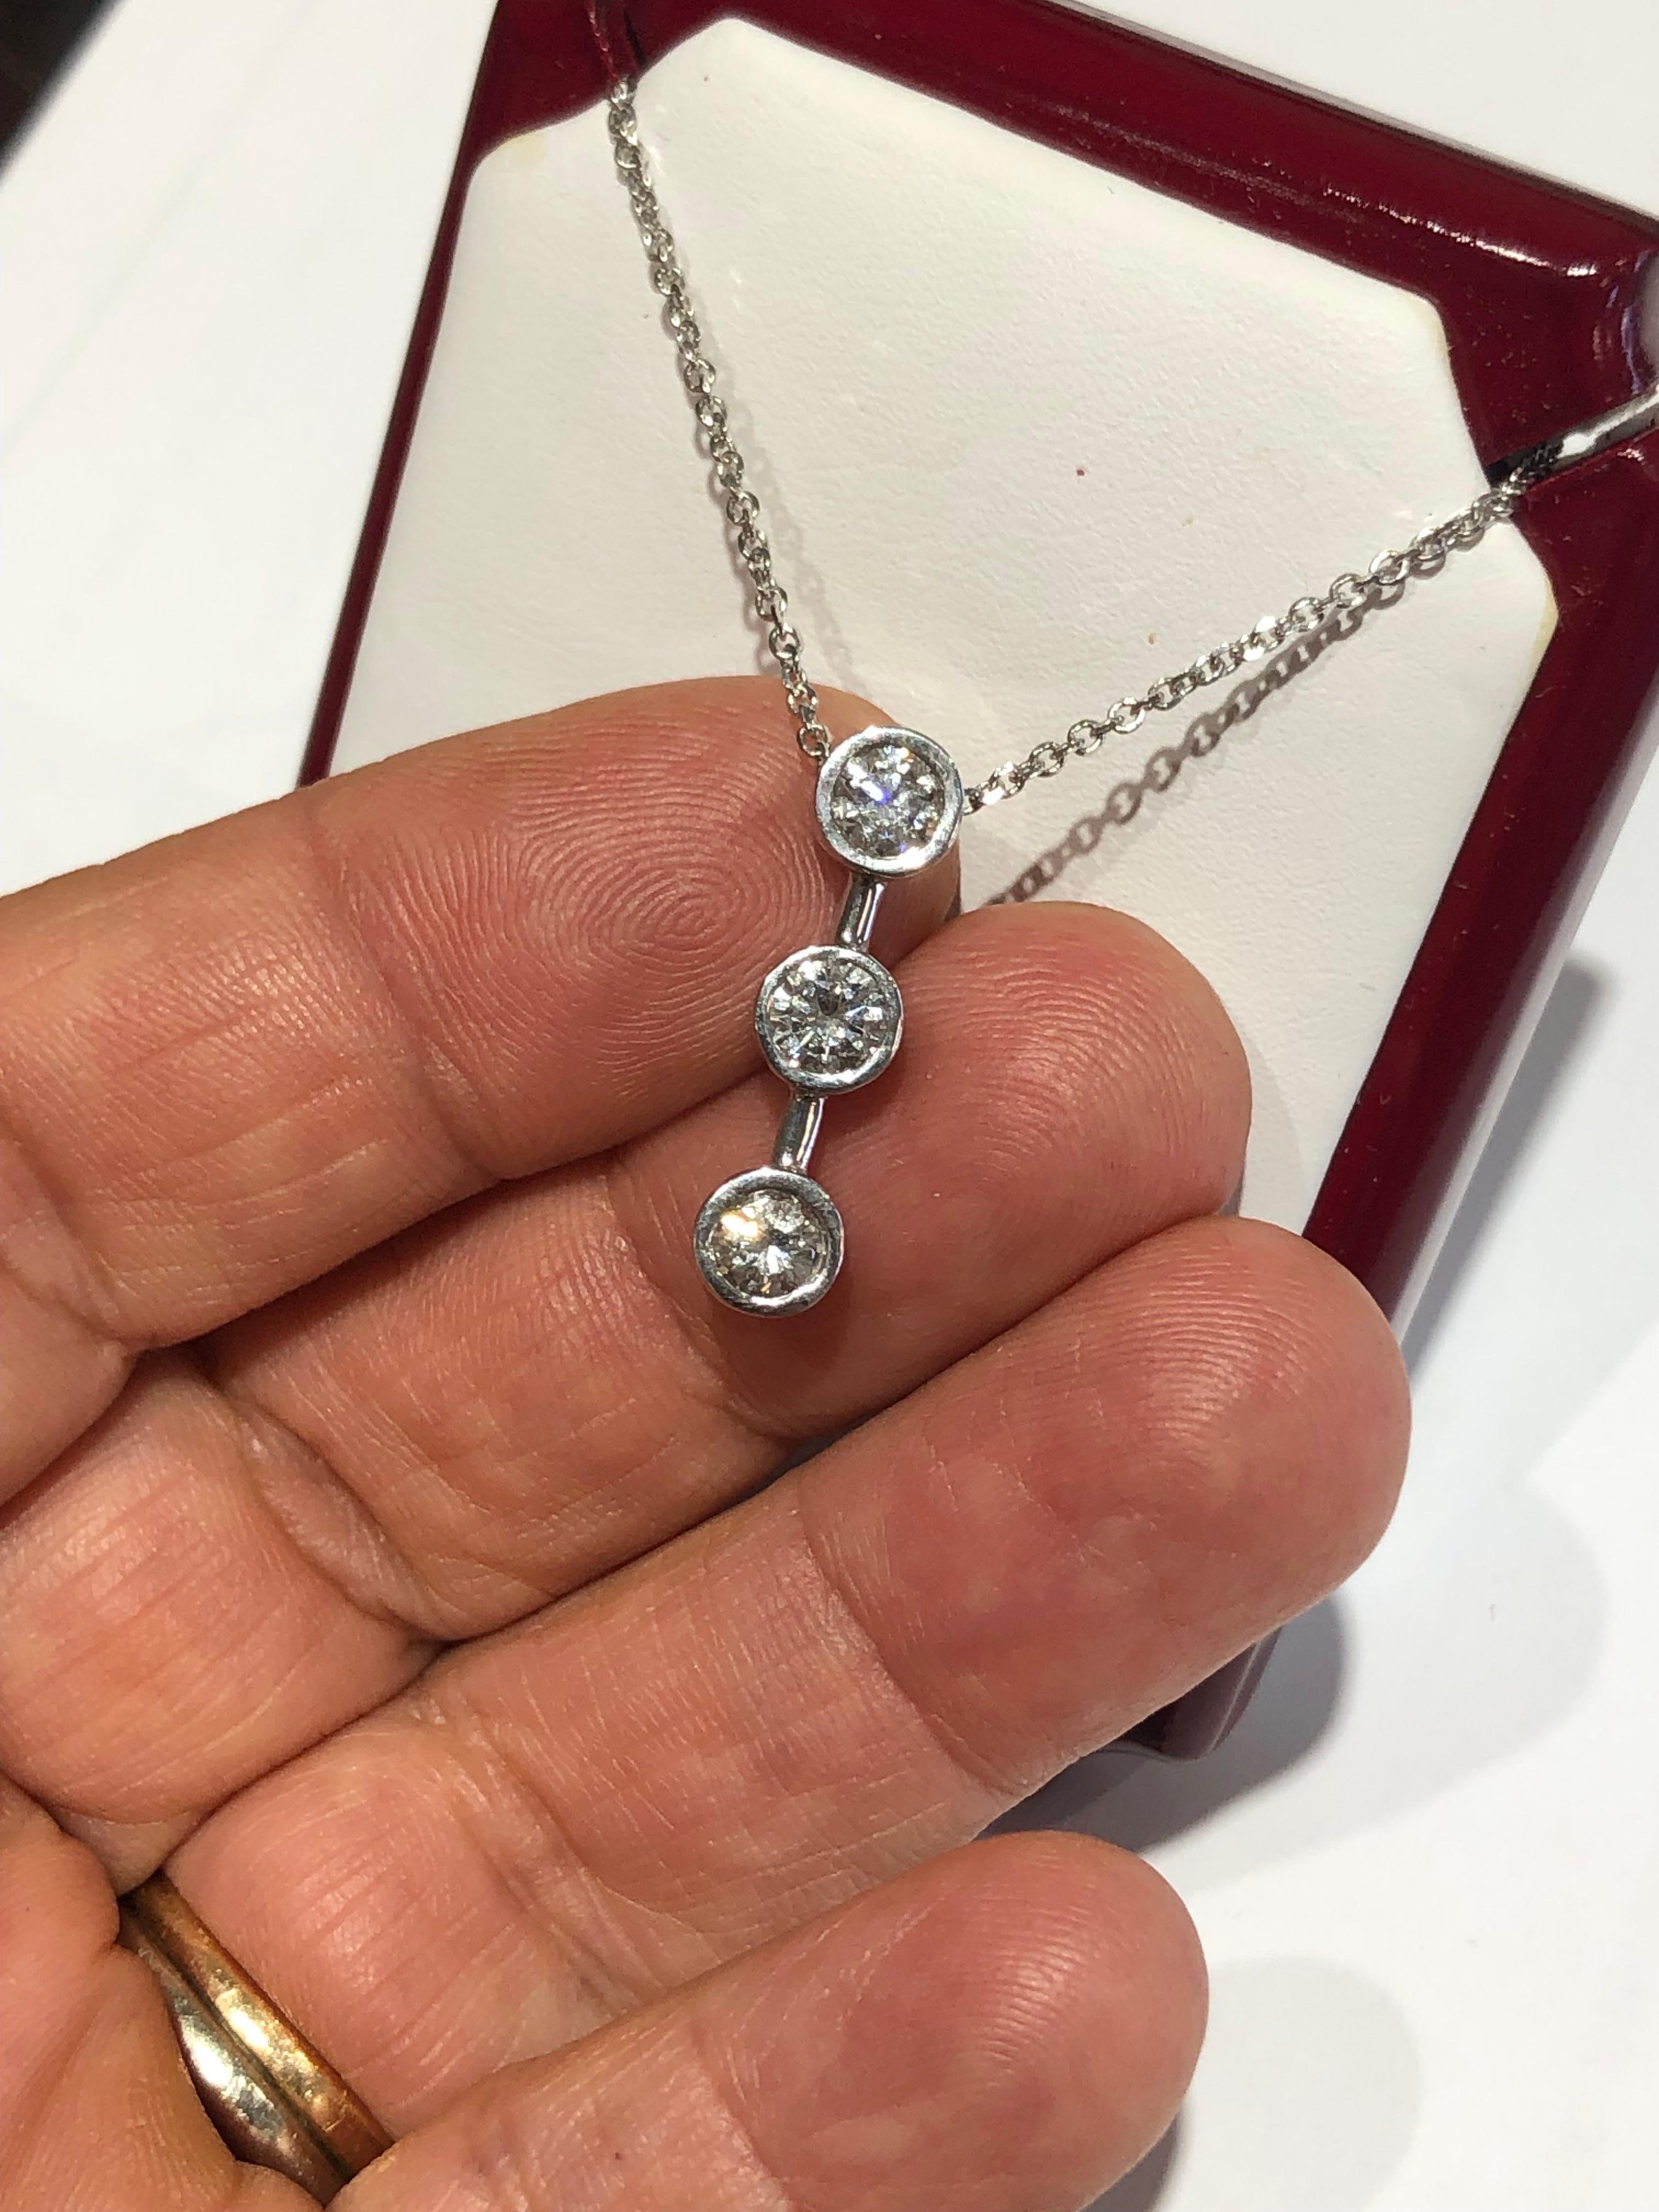 3 stone diamond necklace